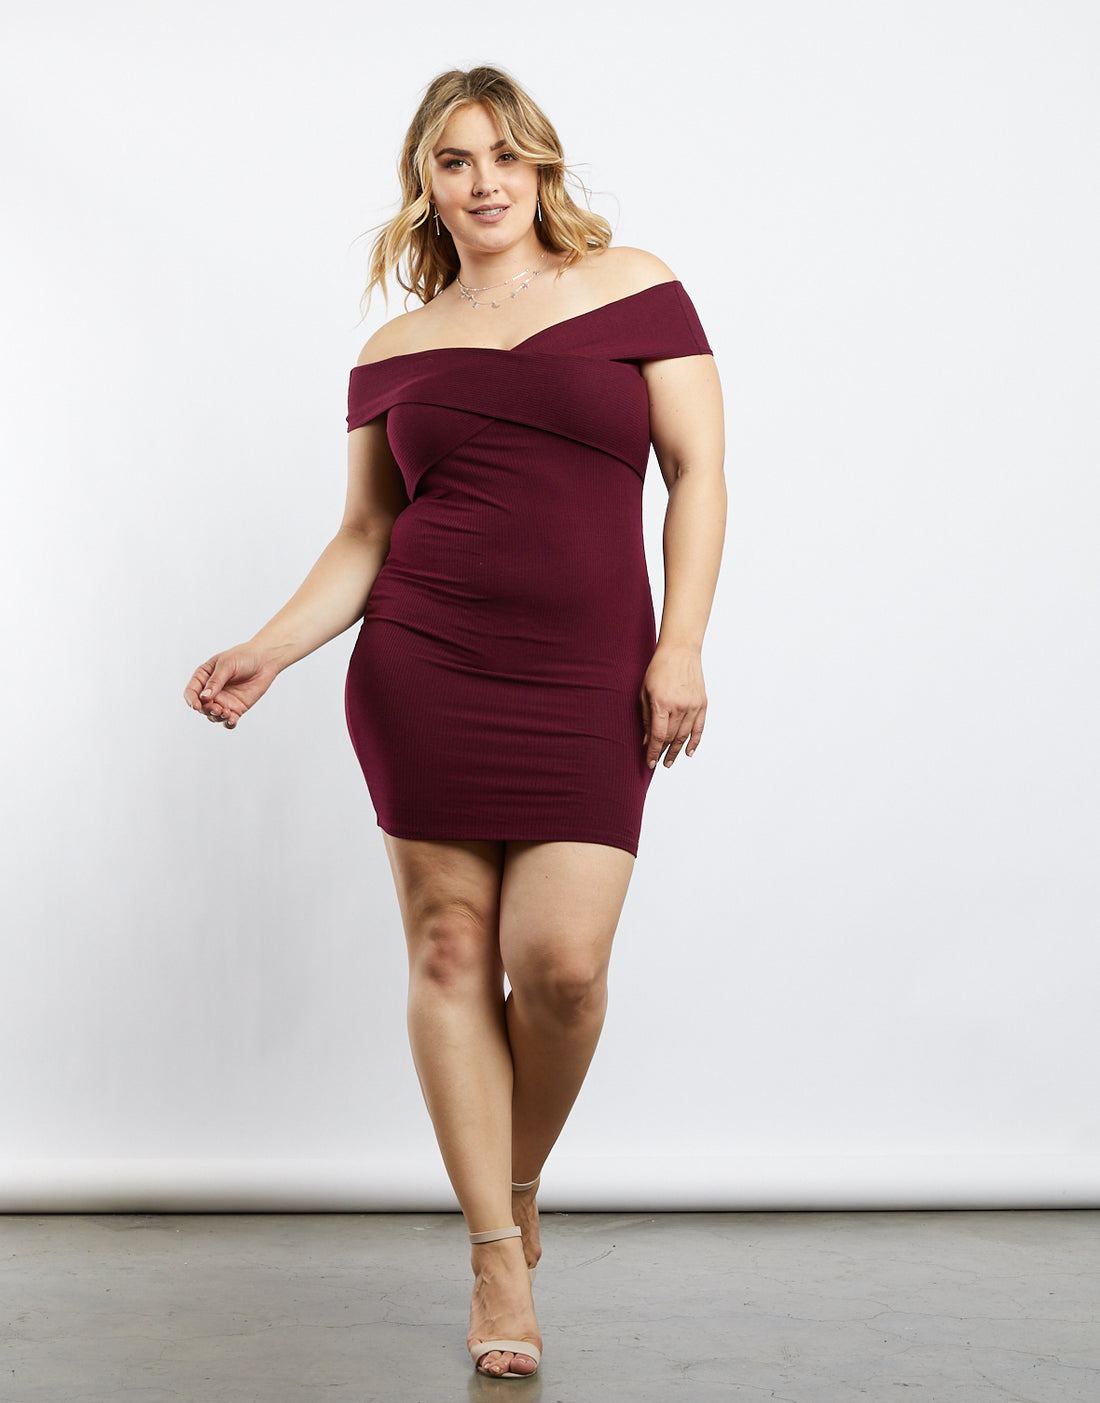 Curve Wrap Around Off The Shoulder Dress Plus Size Dresses Burgundy 1XL -2020AVE